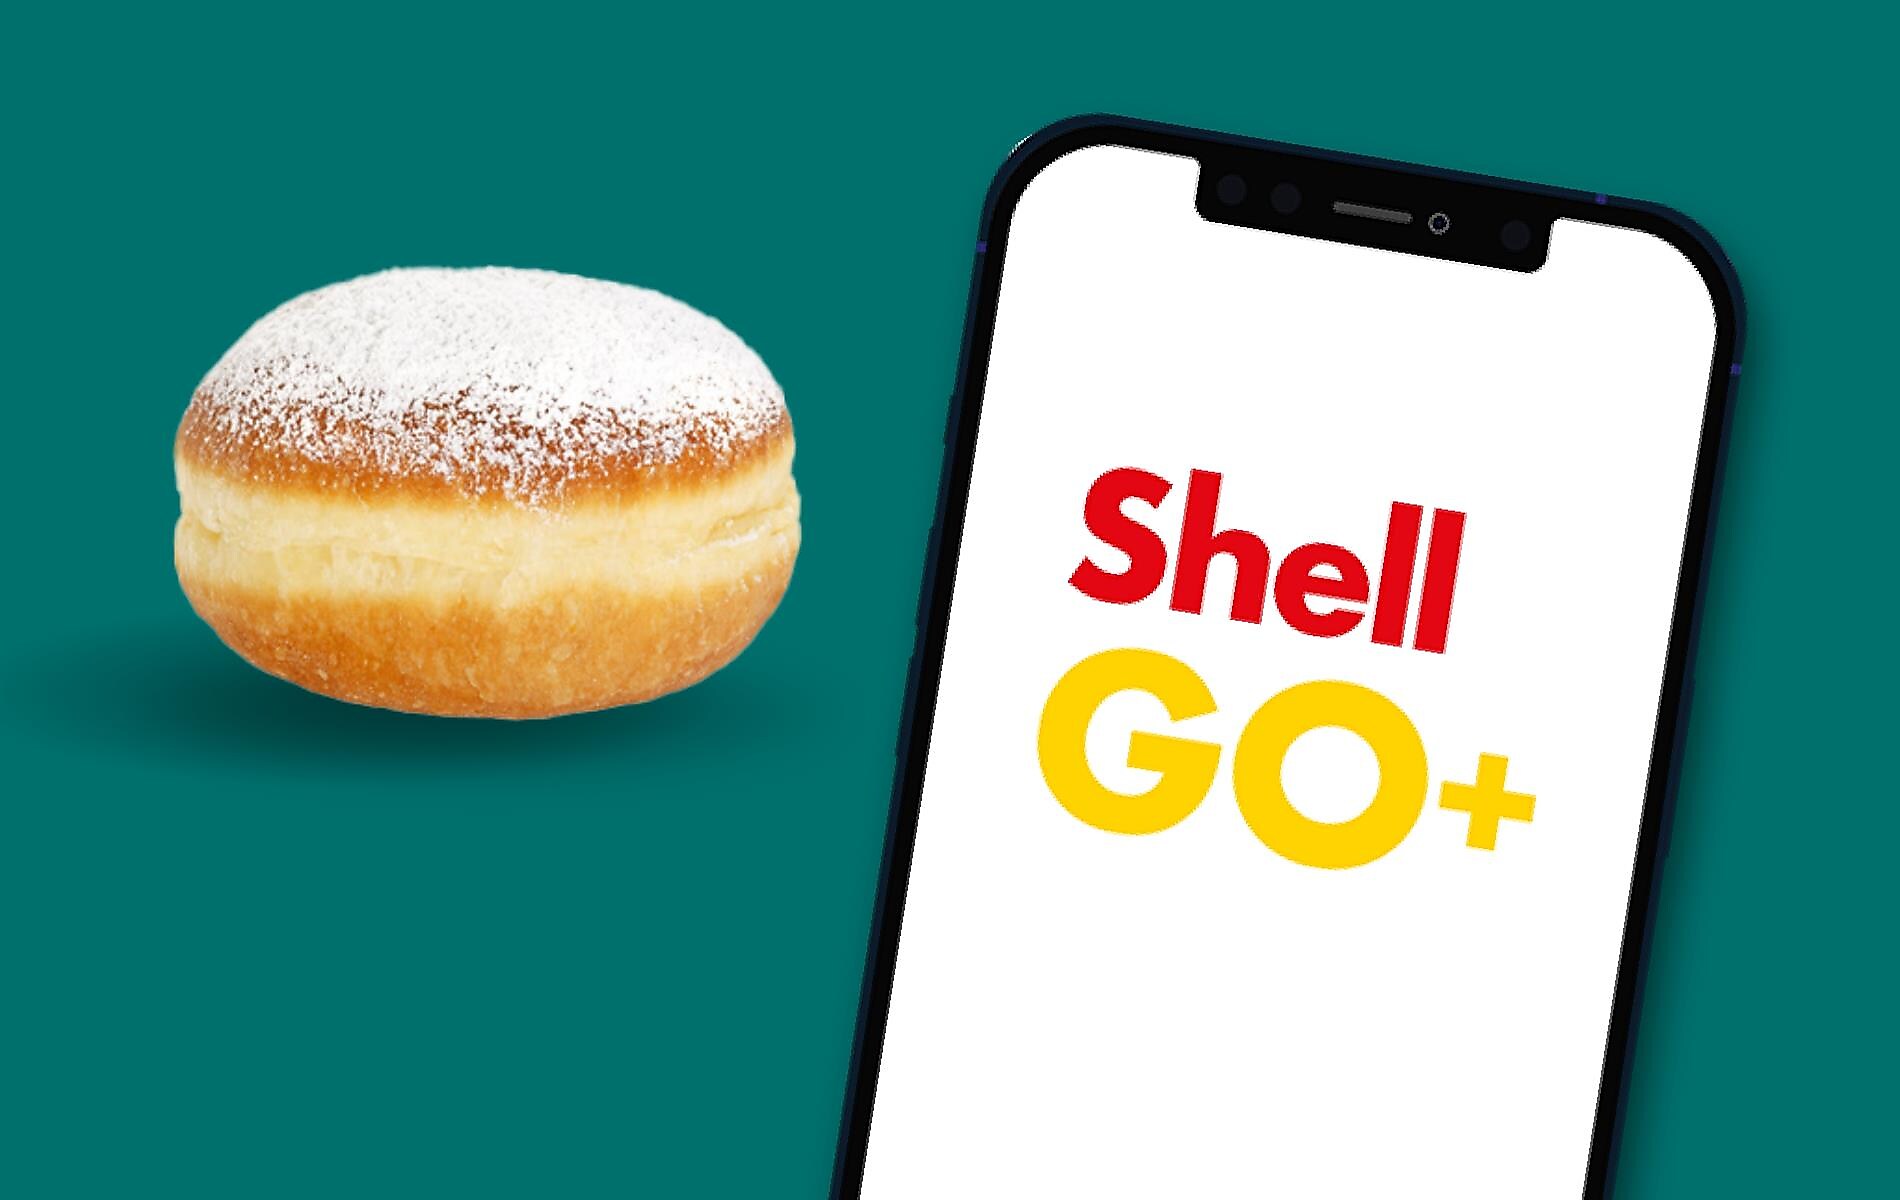 Shell Go+ Punktedeal: Marillenkrapfen um 80 Pkte